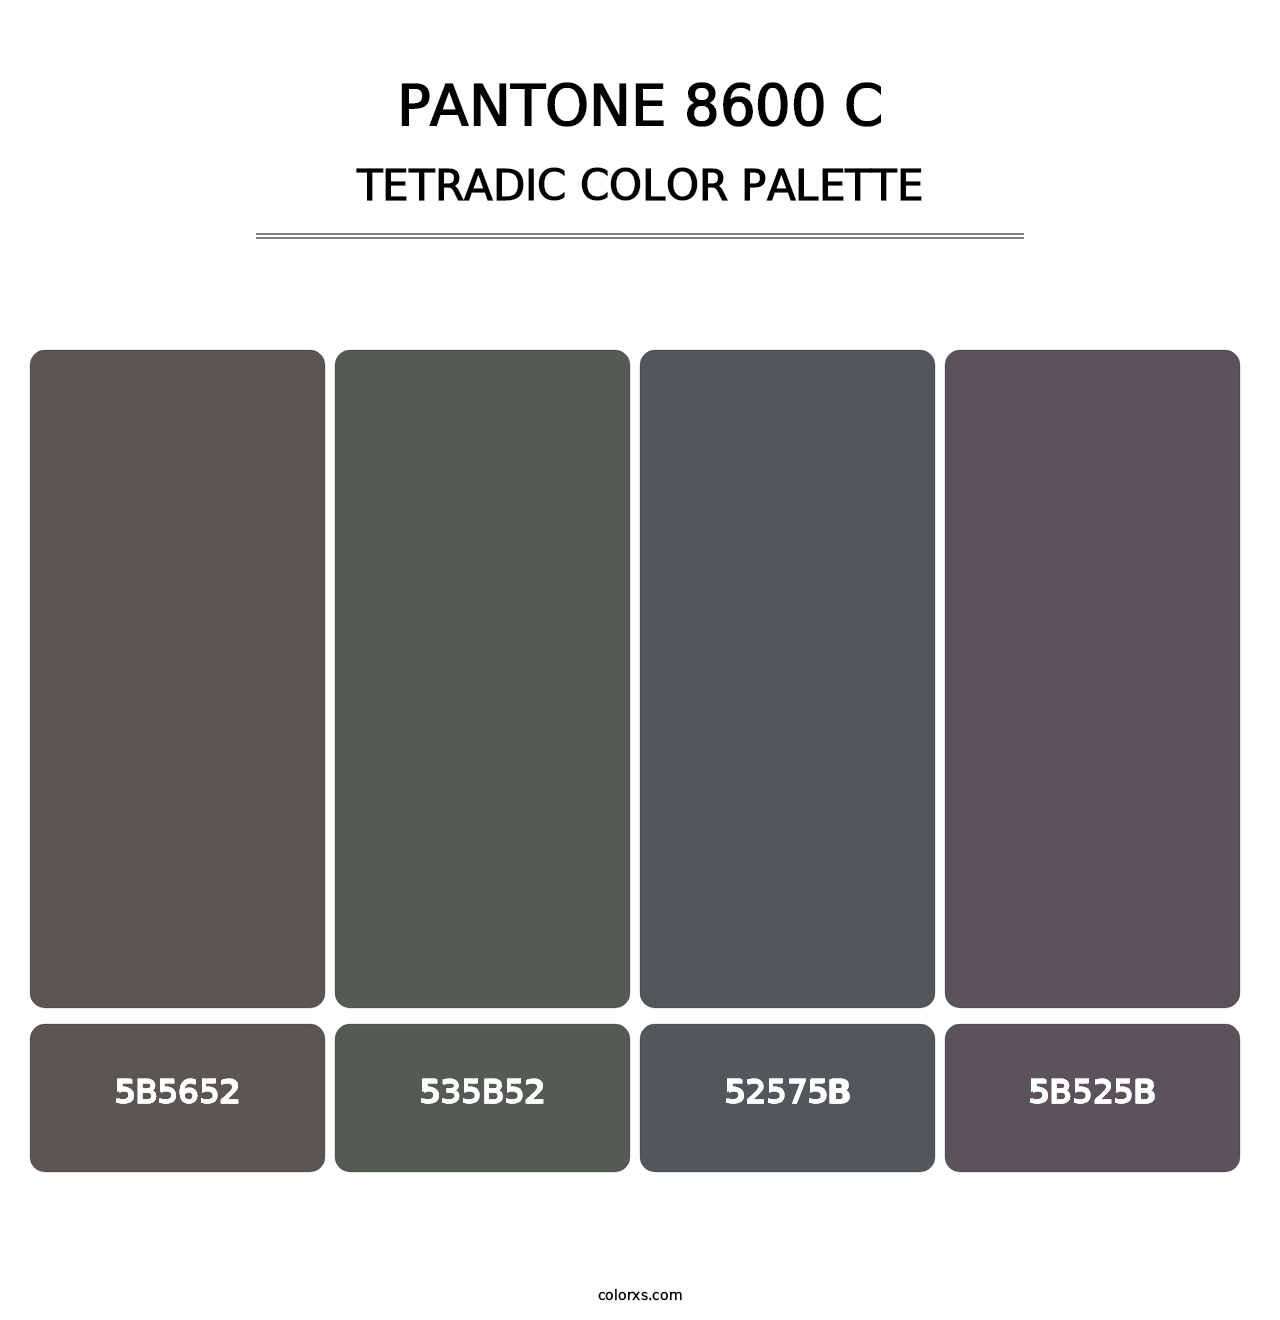 PANTONE 8600 C - Tetradic Color Palette